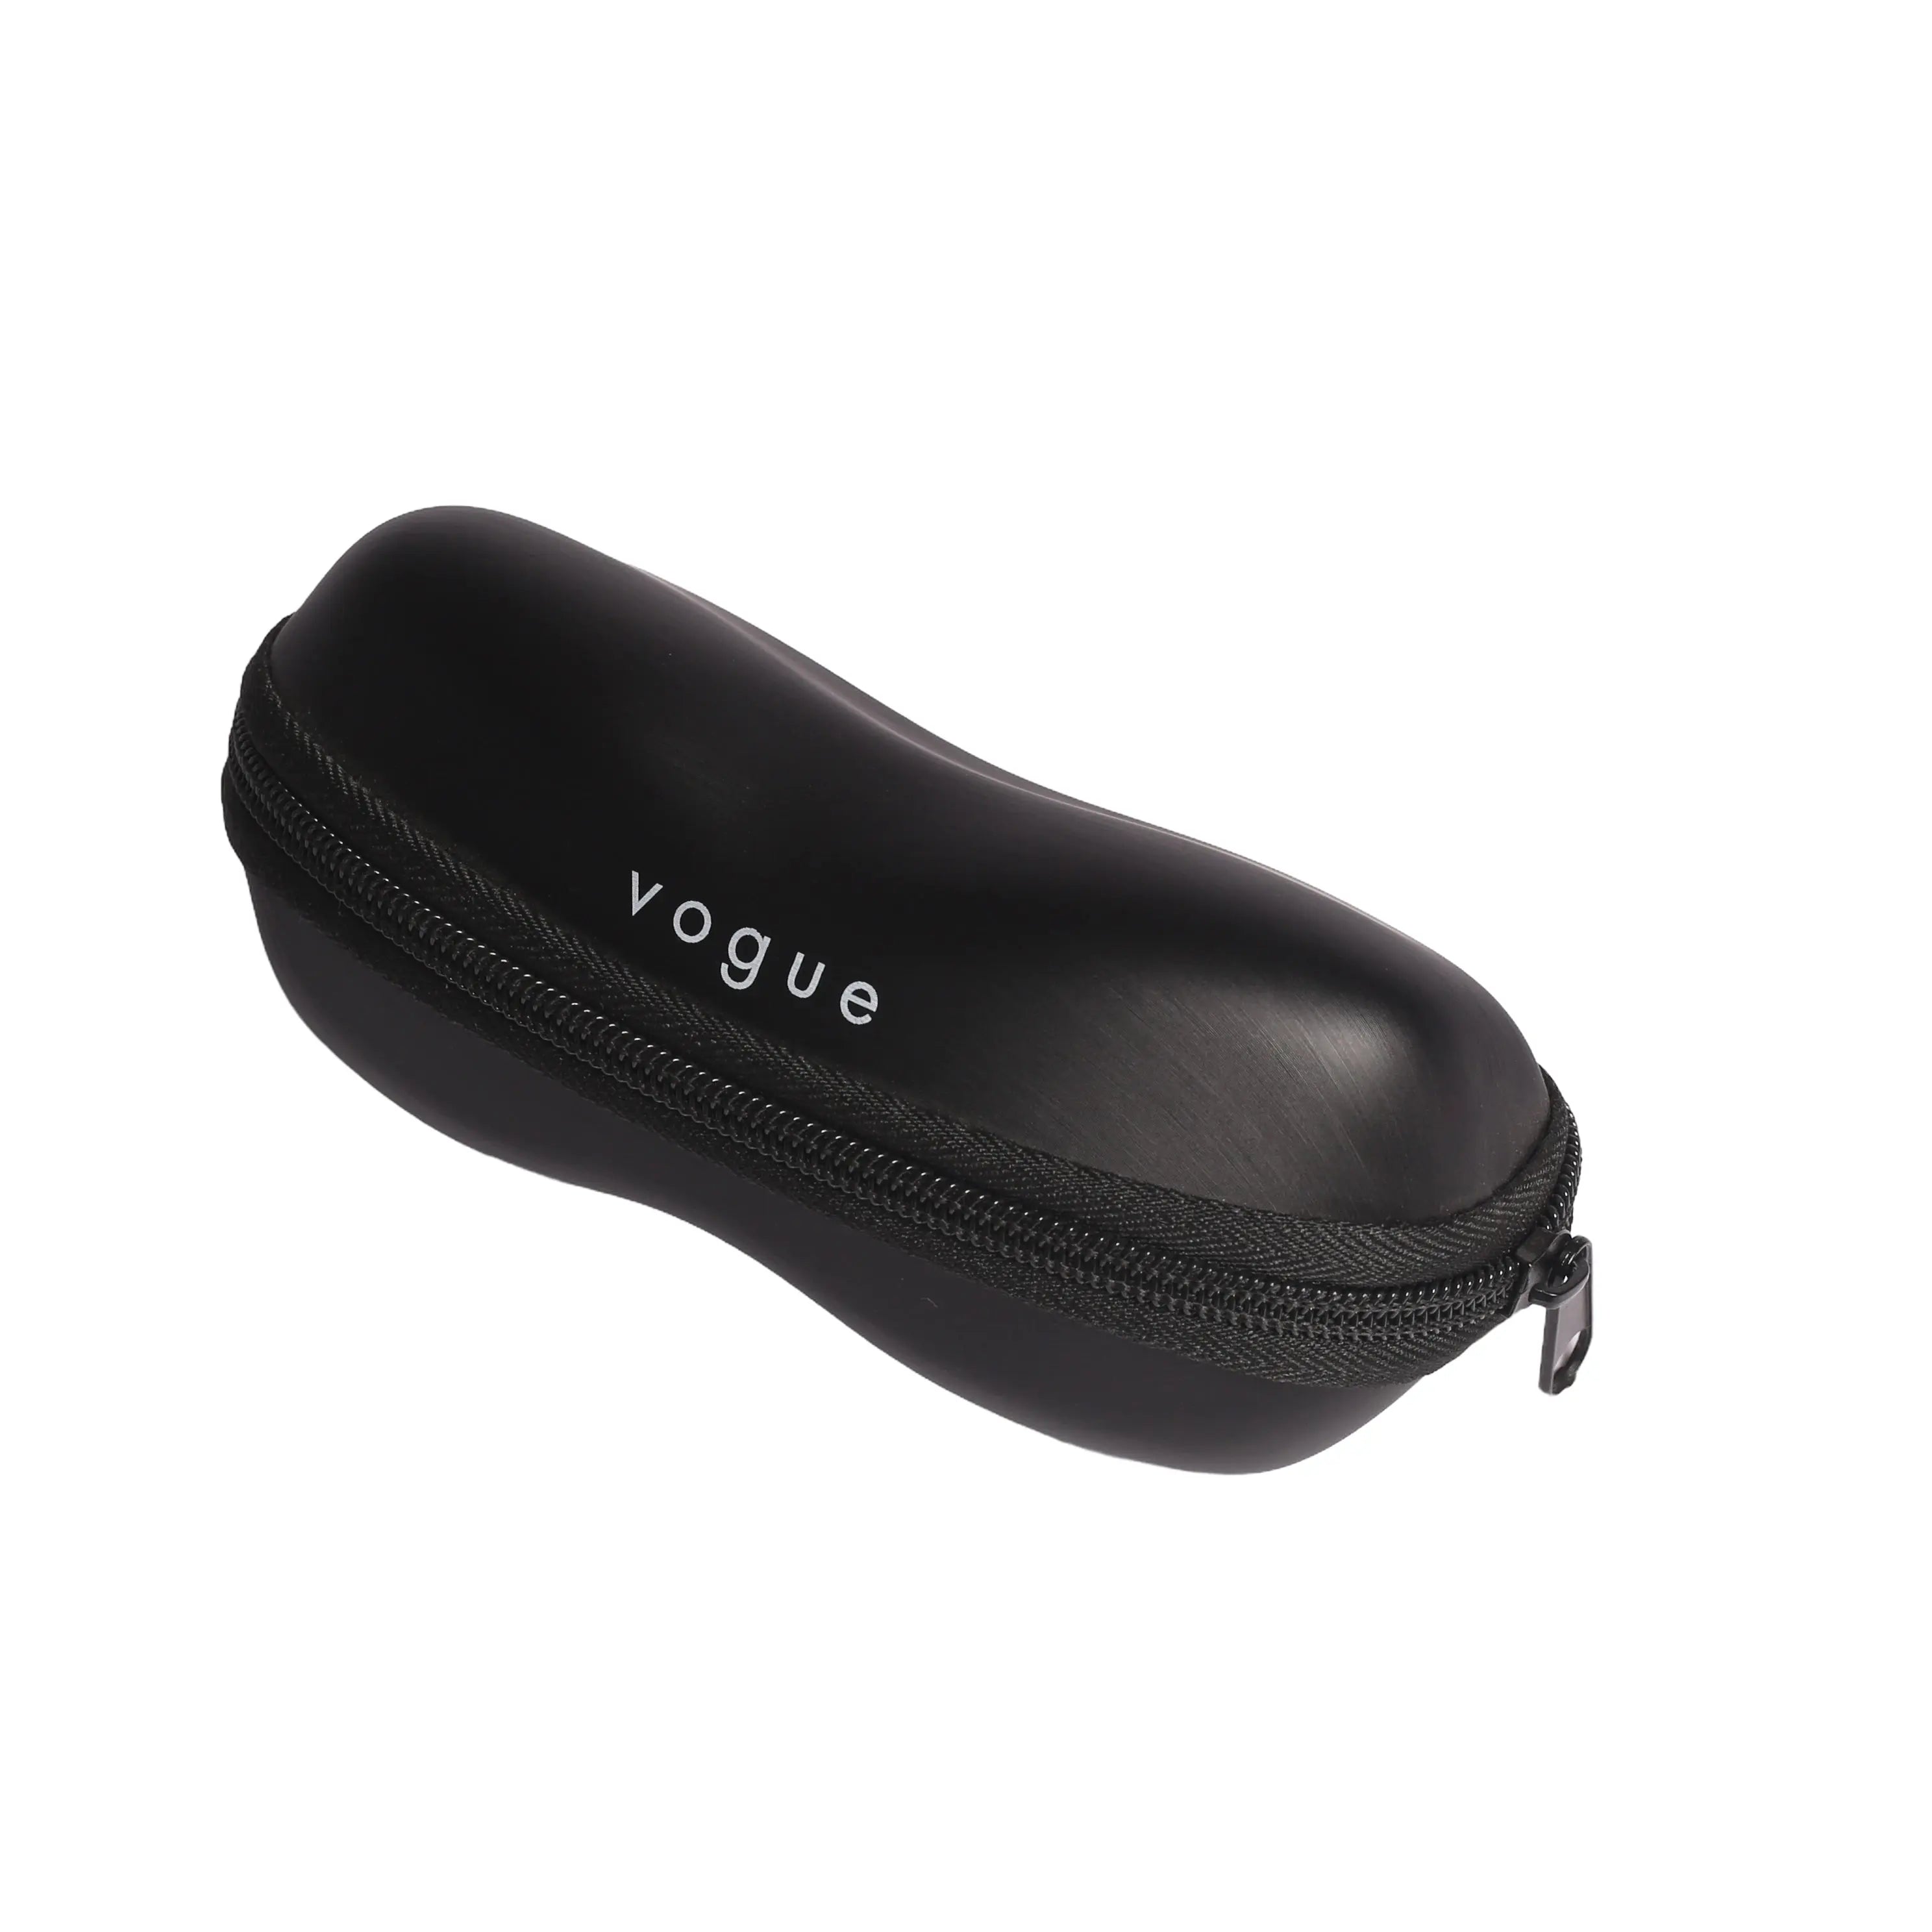 Vogue-VO 5426S-54-W44/87 Sunglasses - Premium Sunglasses from Vogue - Just Rs. 5190! Shop now at Laxmi Opticians